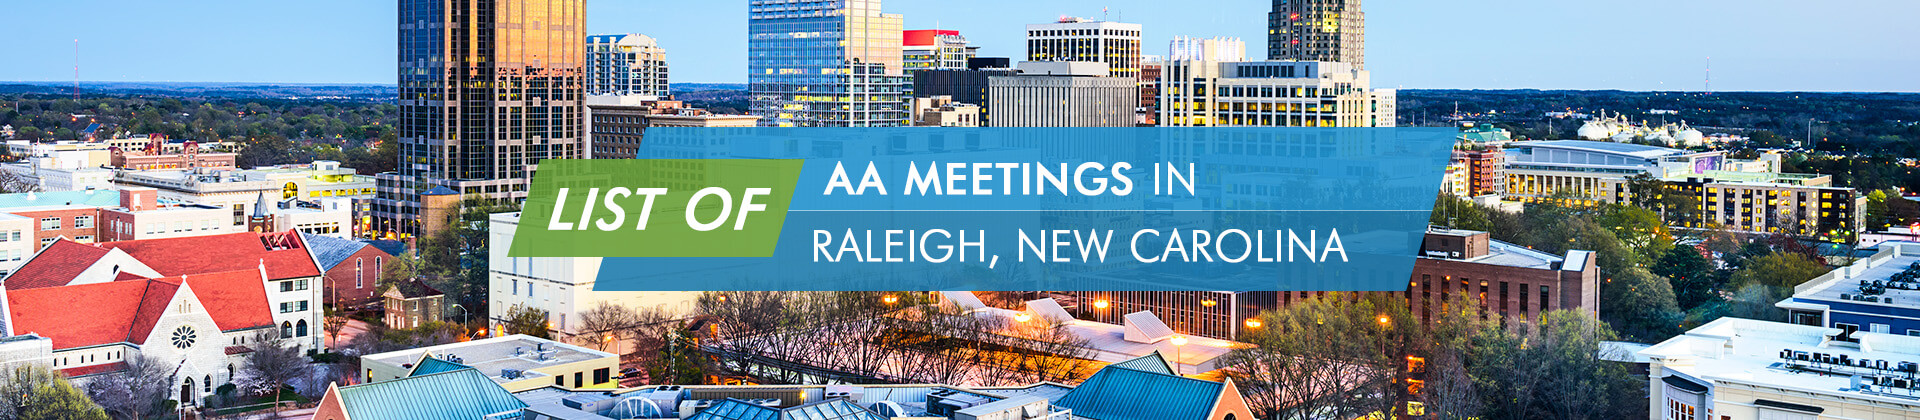 AA Meetings Raleigh New Carolina